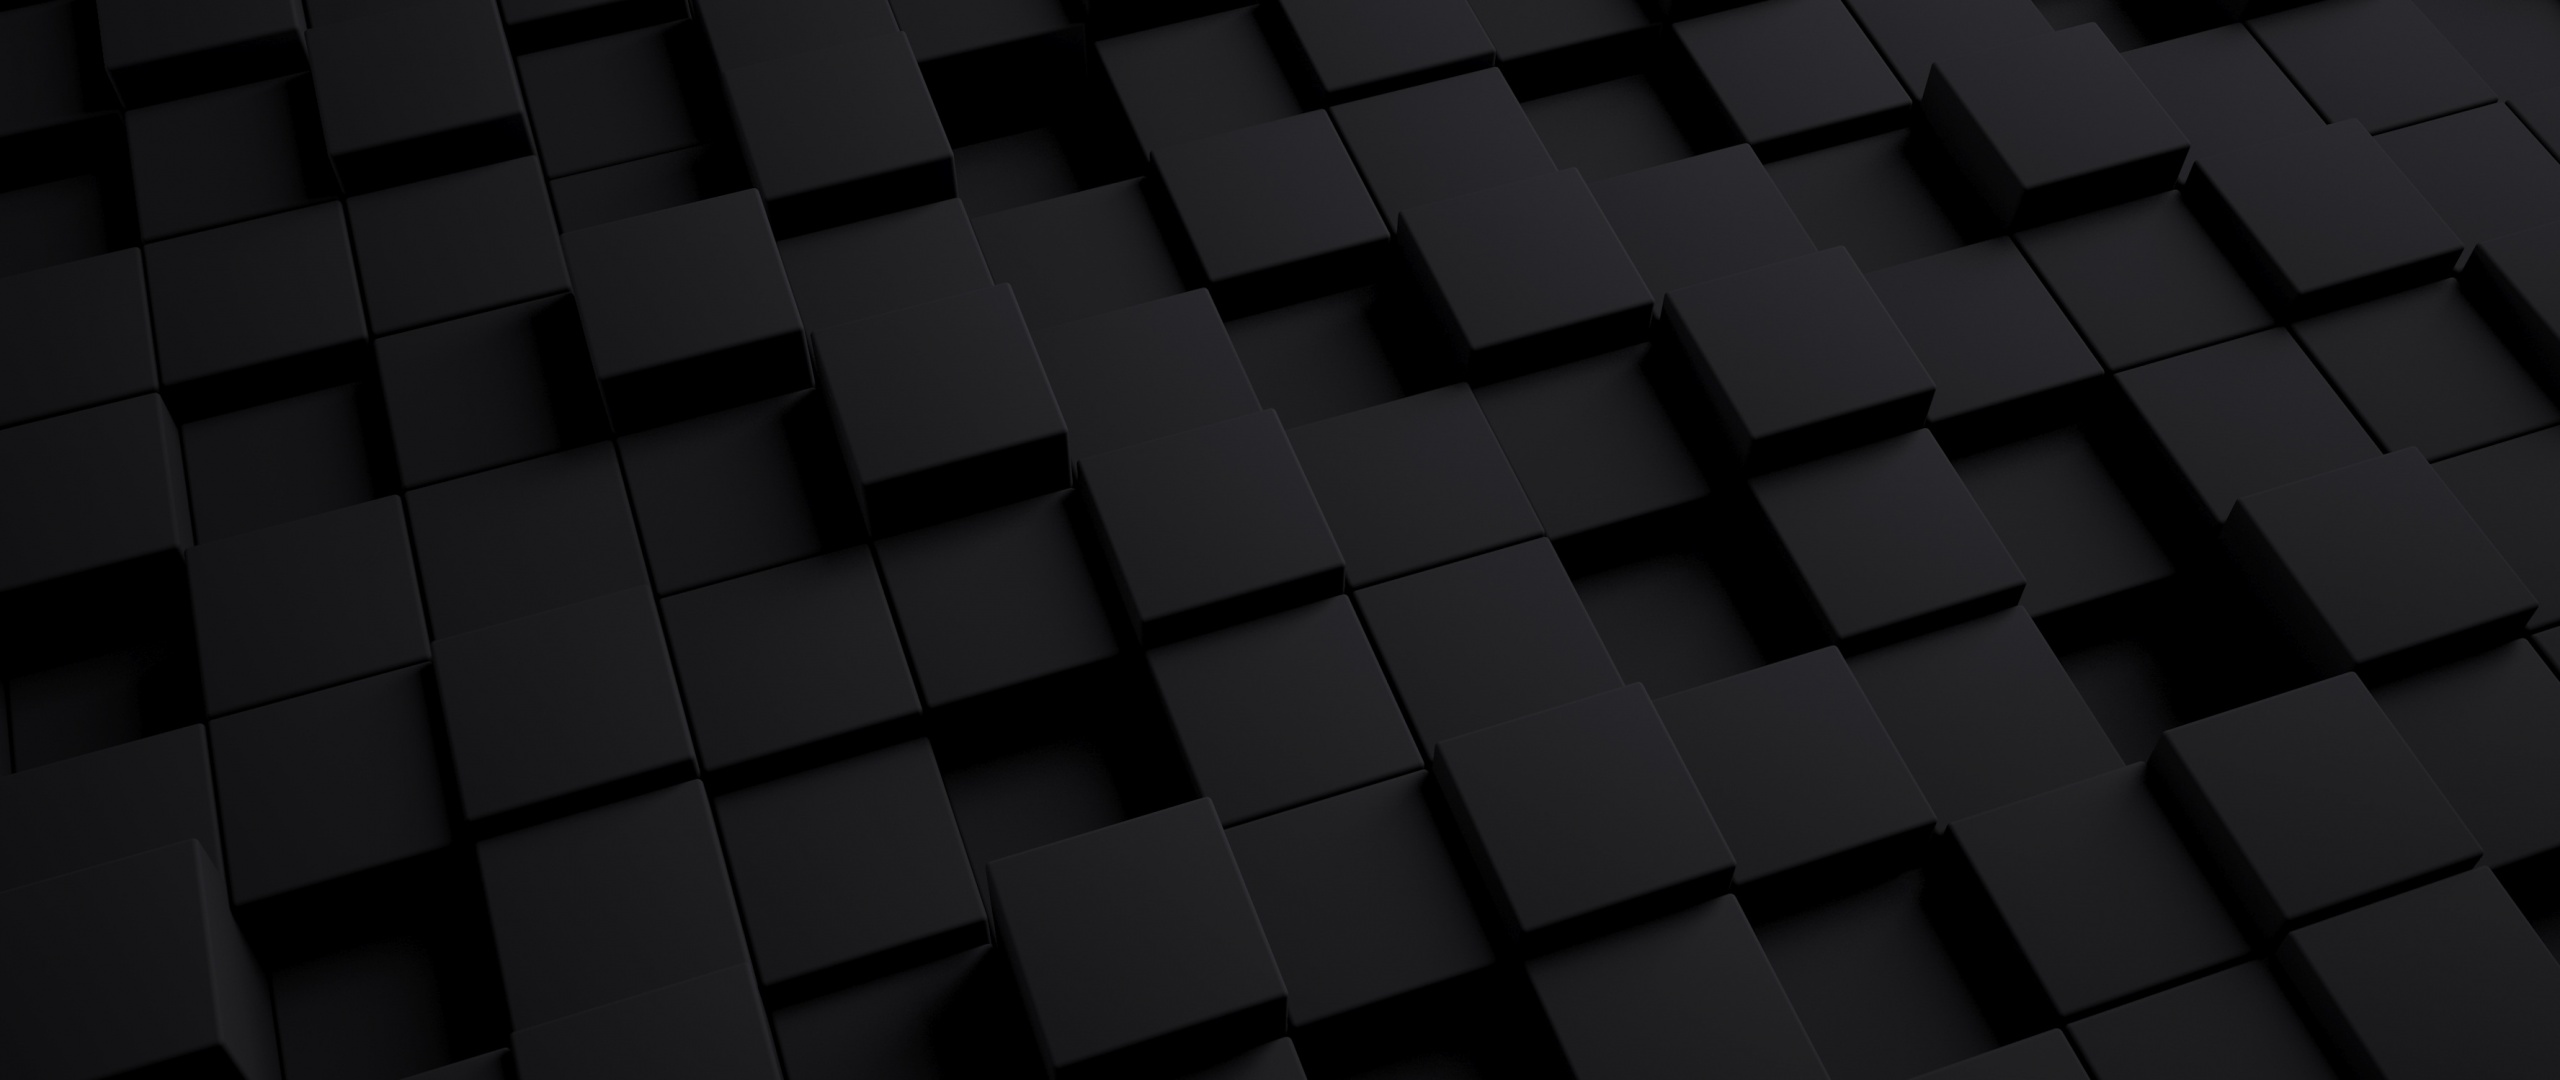 3d Black Cube Wallpaper Iphone Image Num 52